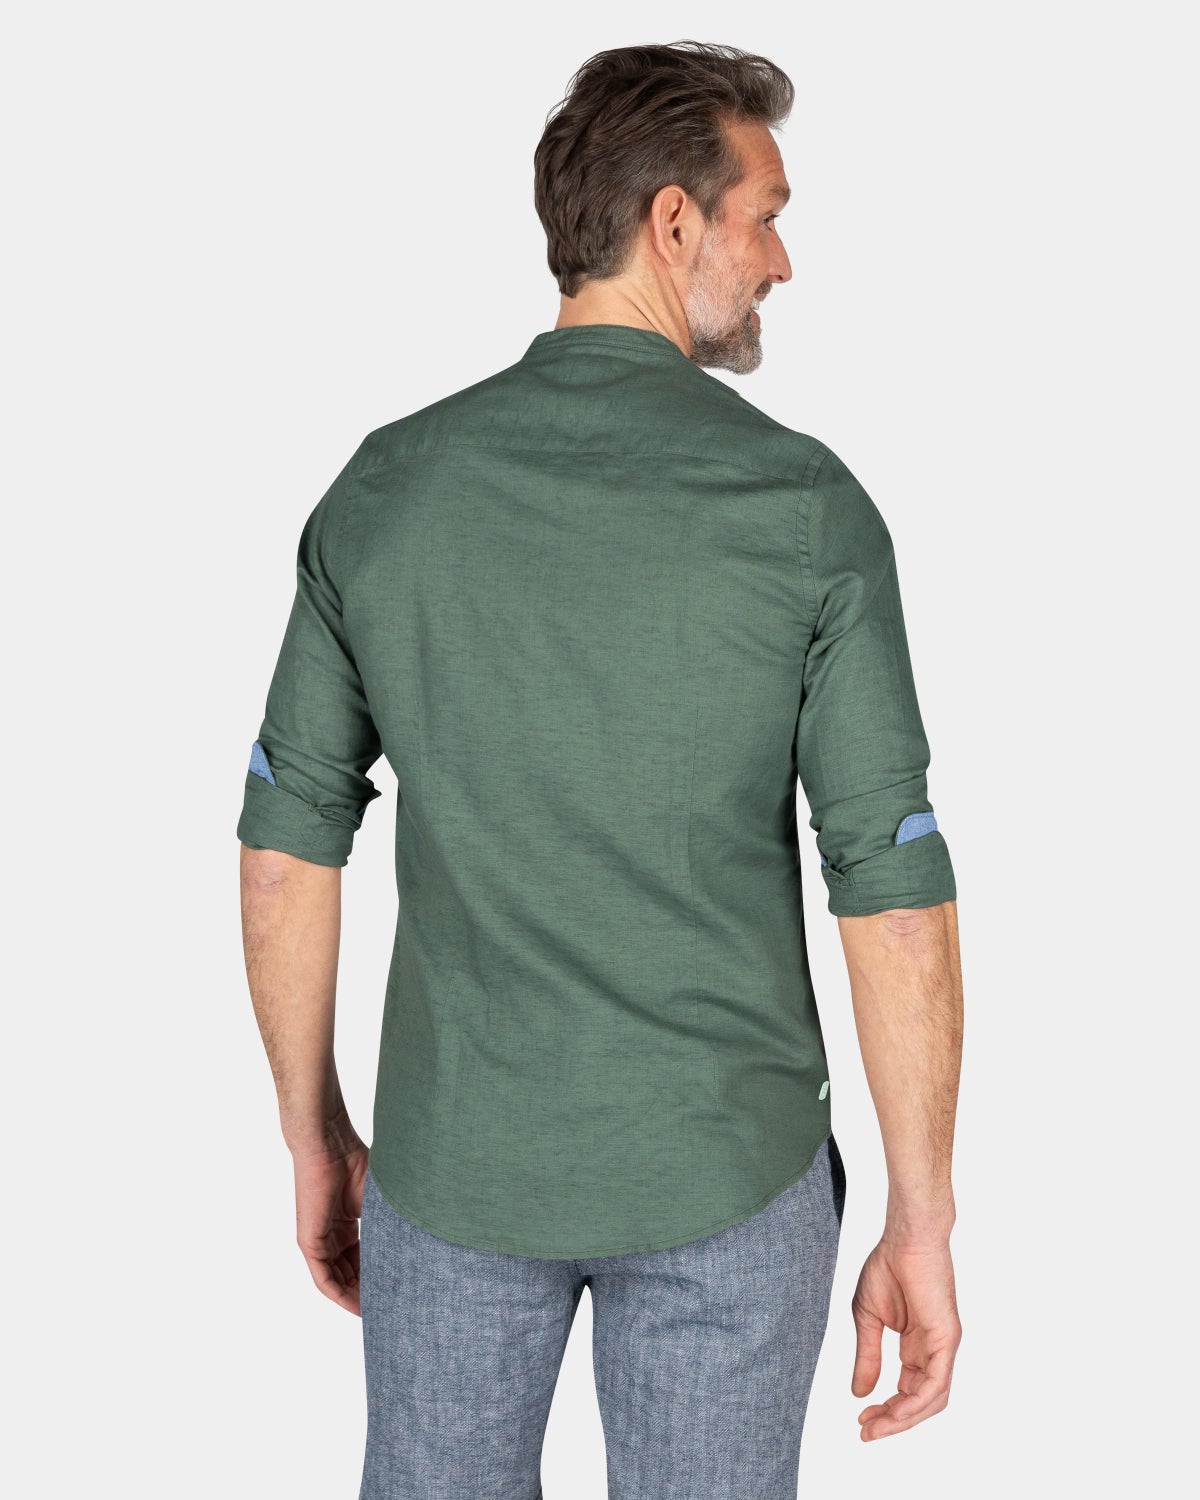 Plain shirt without collar - Chalk Green